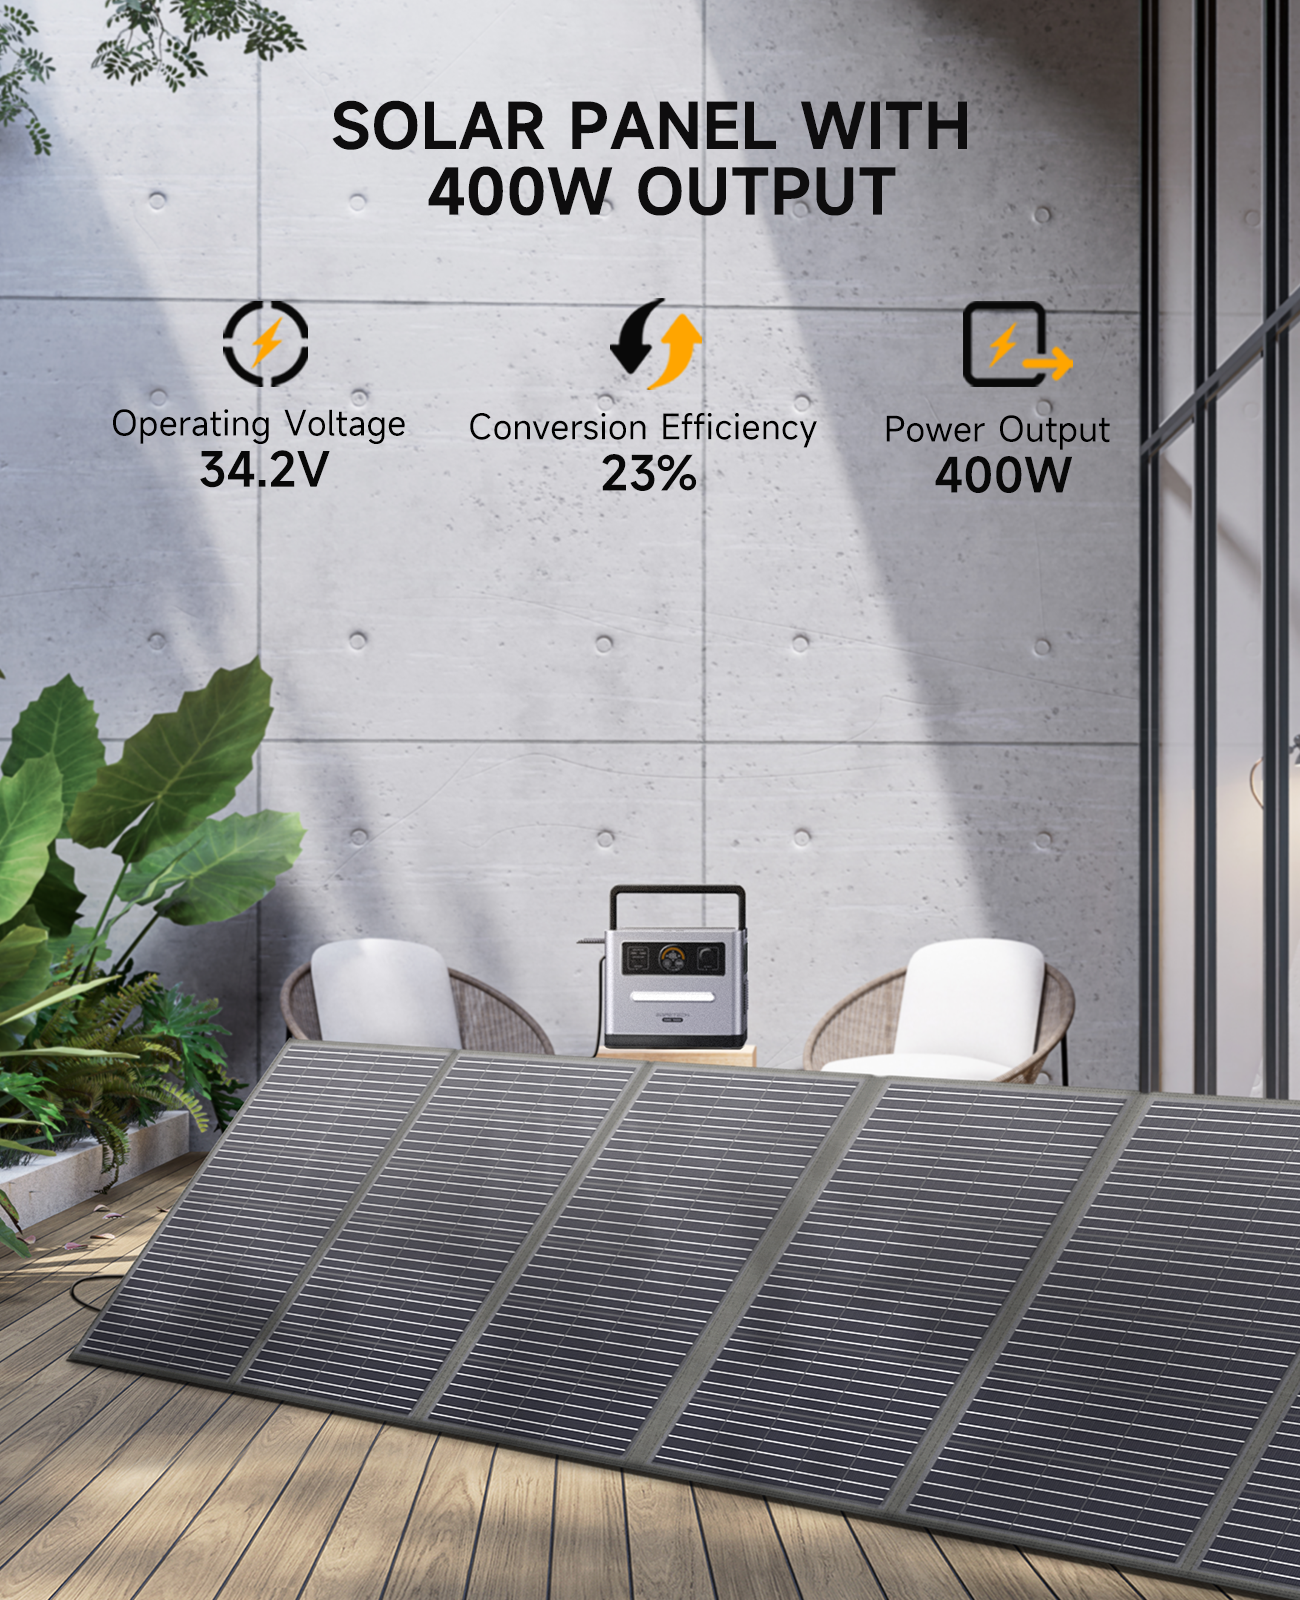 Egretech Protable 400W solar panel